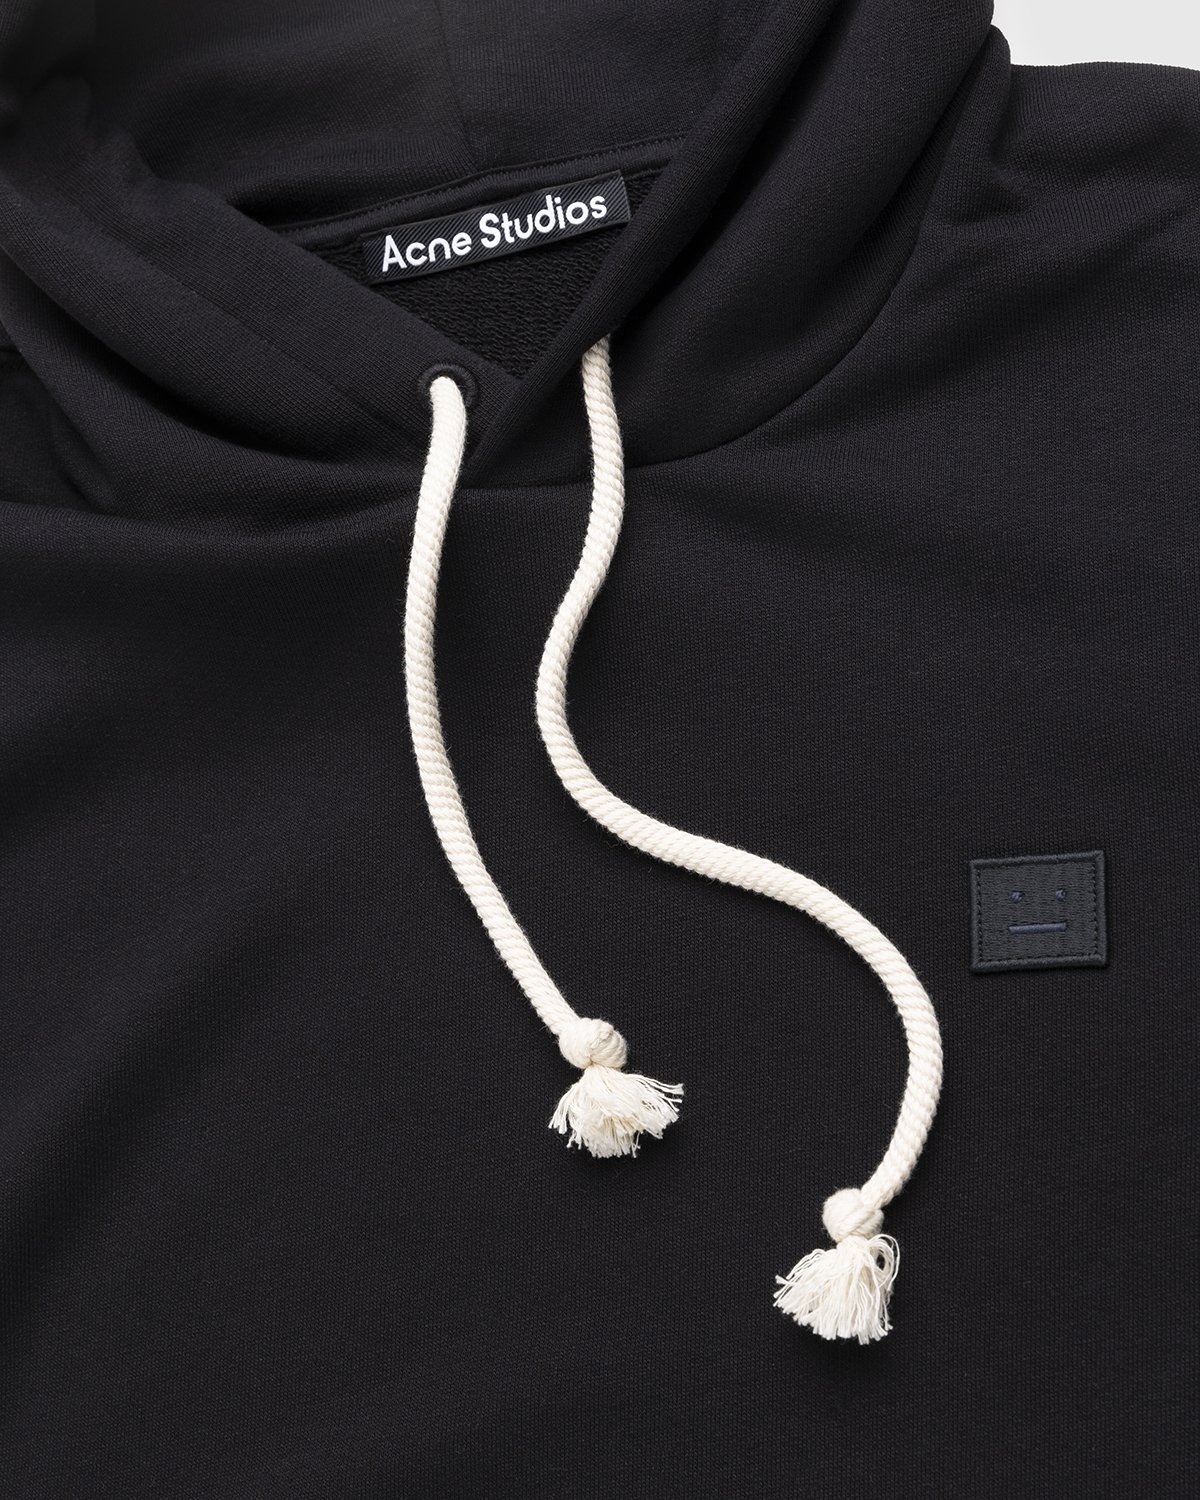 Acne Studios - Organic Cotton Hooded Sweatshirt Black - Clothing - Black - Image 3